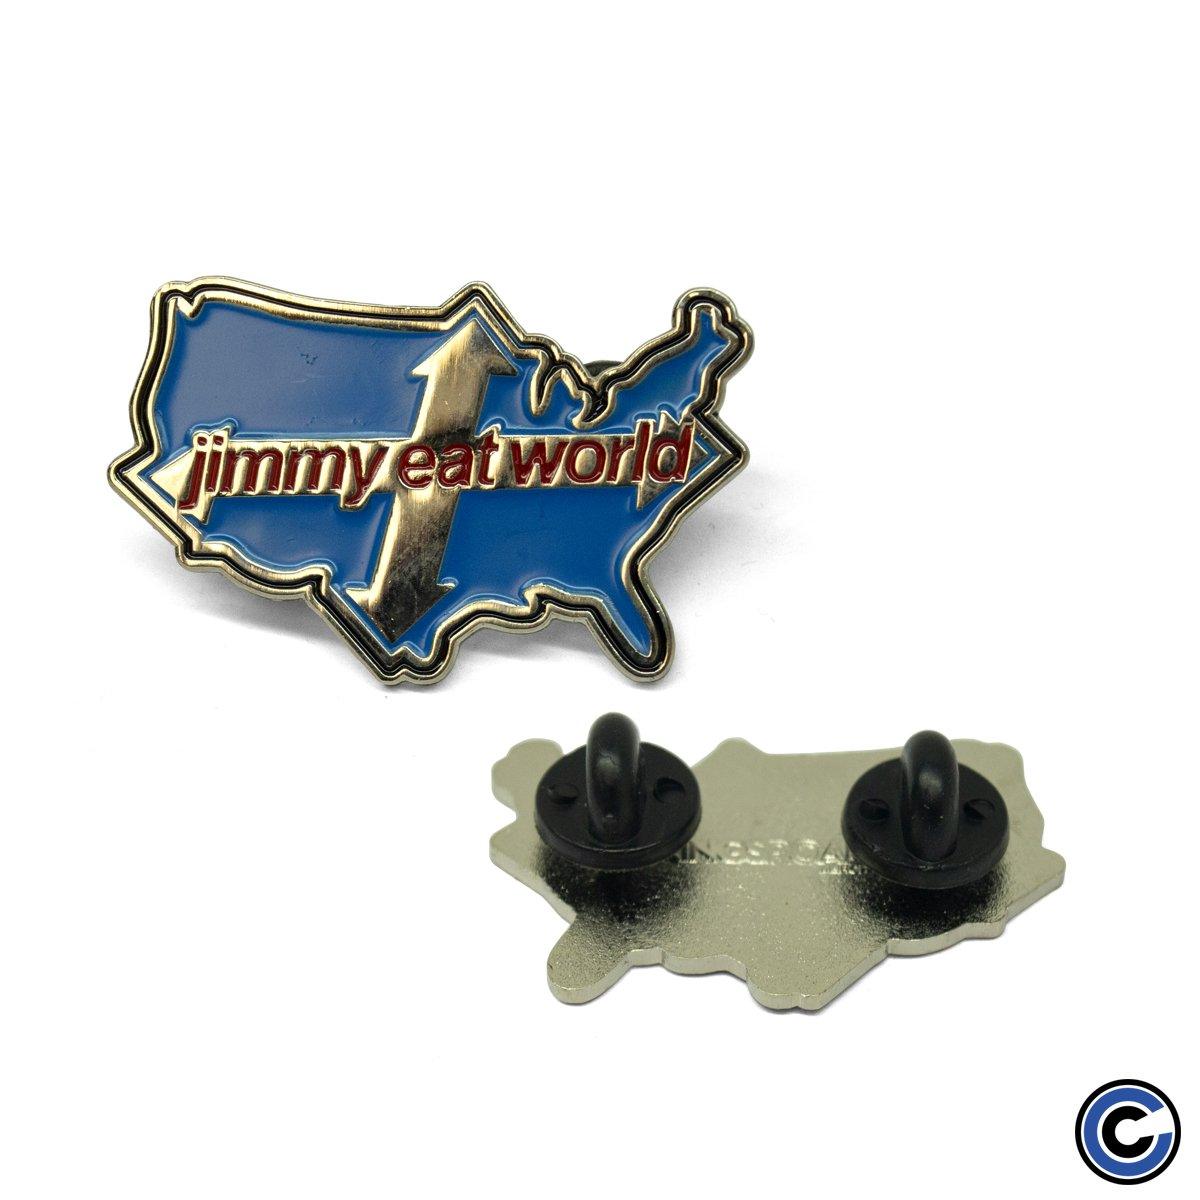 Buy – Jimmy Eat World "Across America" Enamel Pin – Band & Music Merch – Cold Cuts Merch